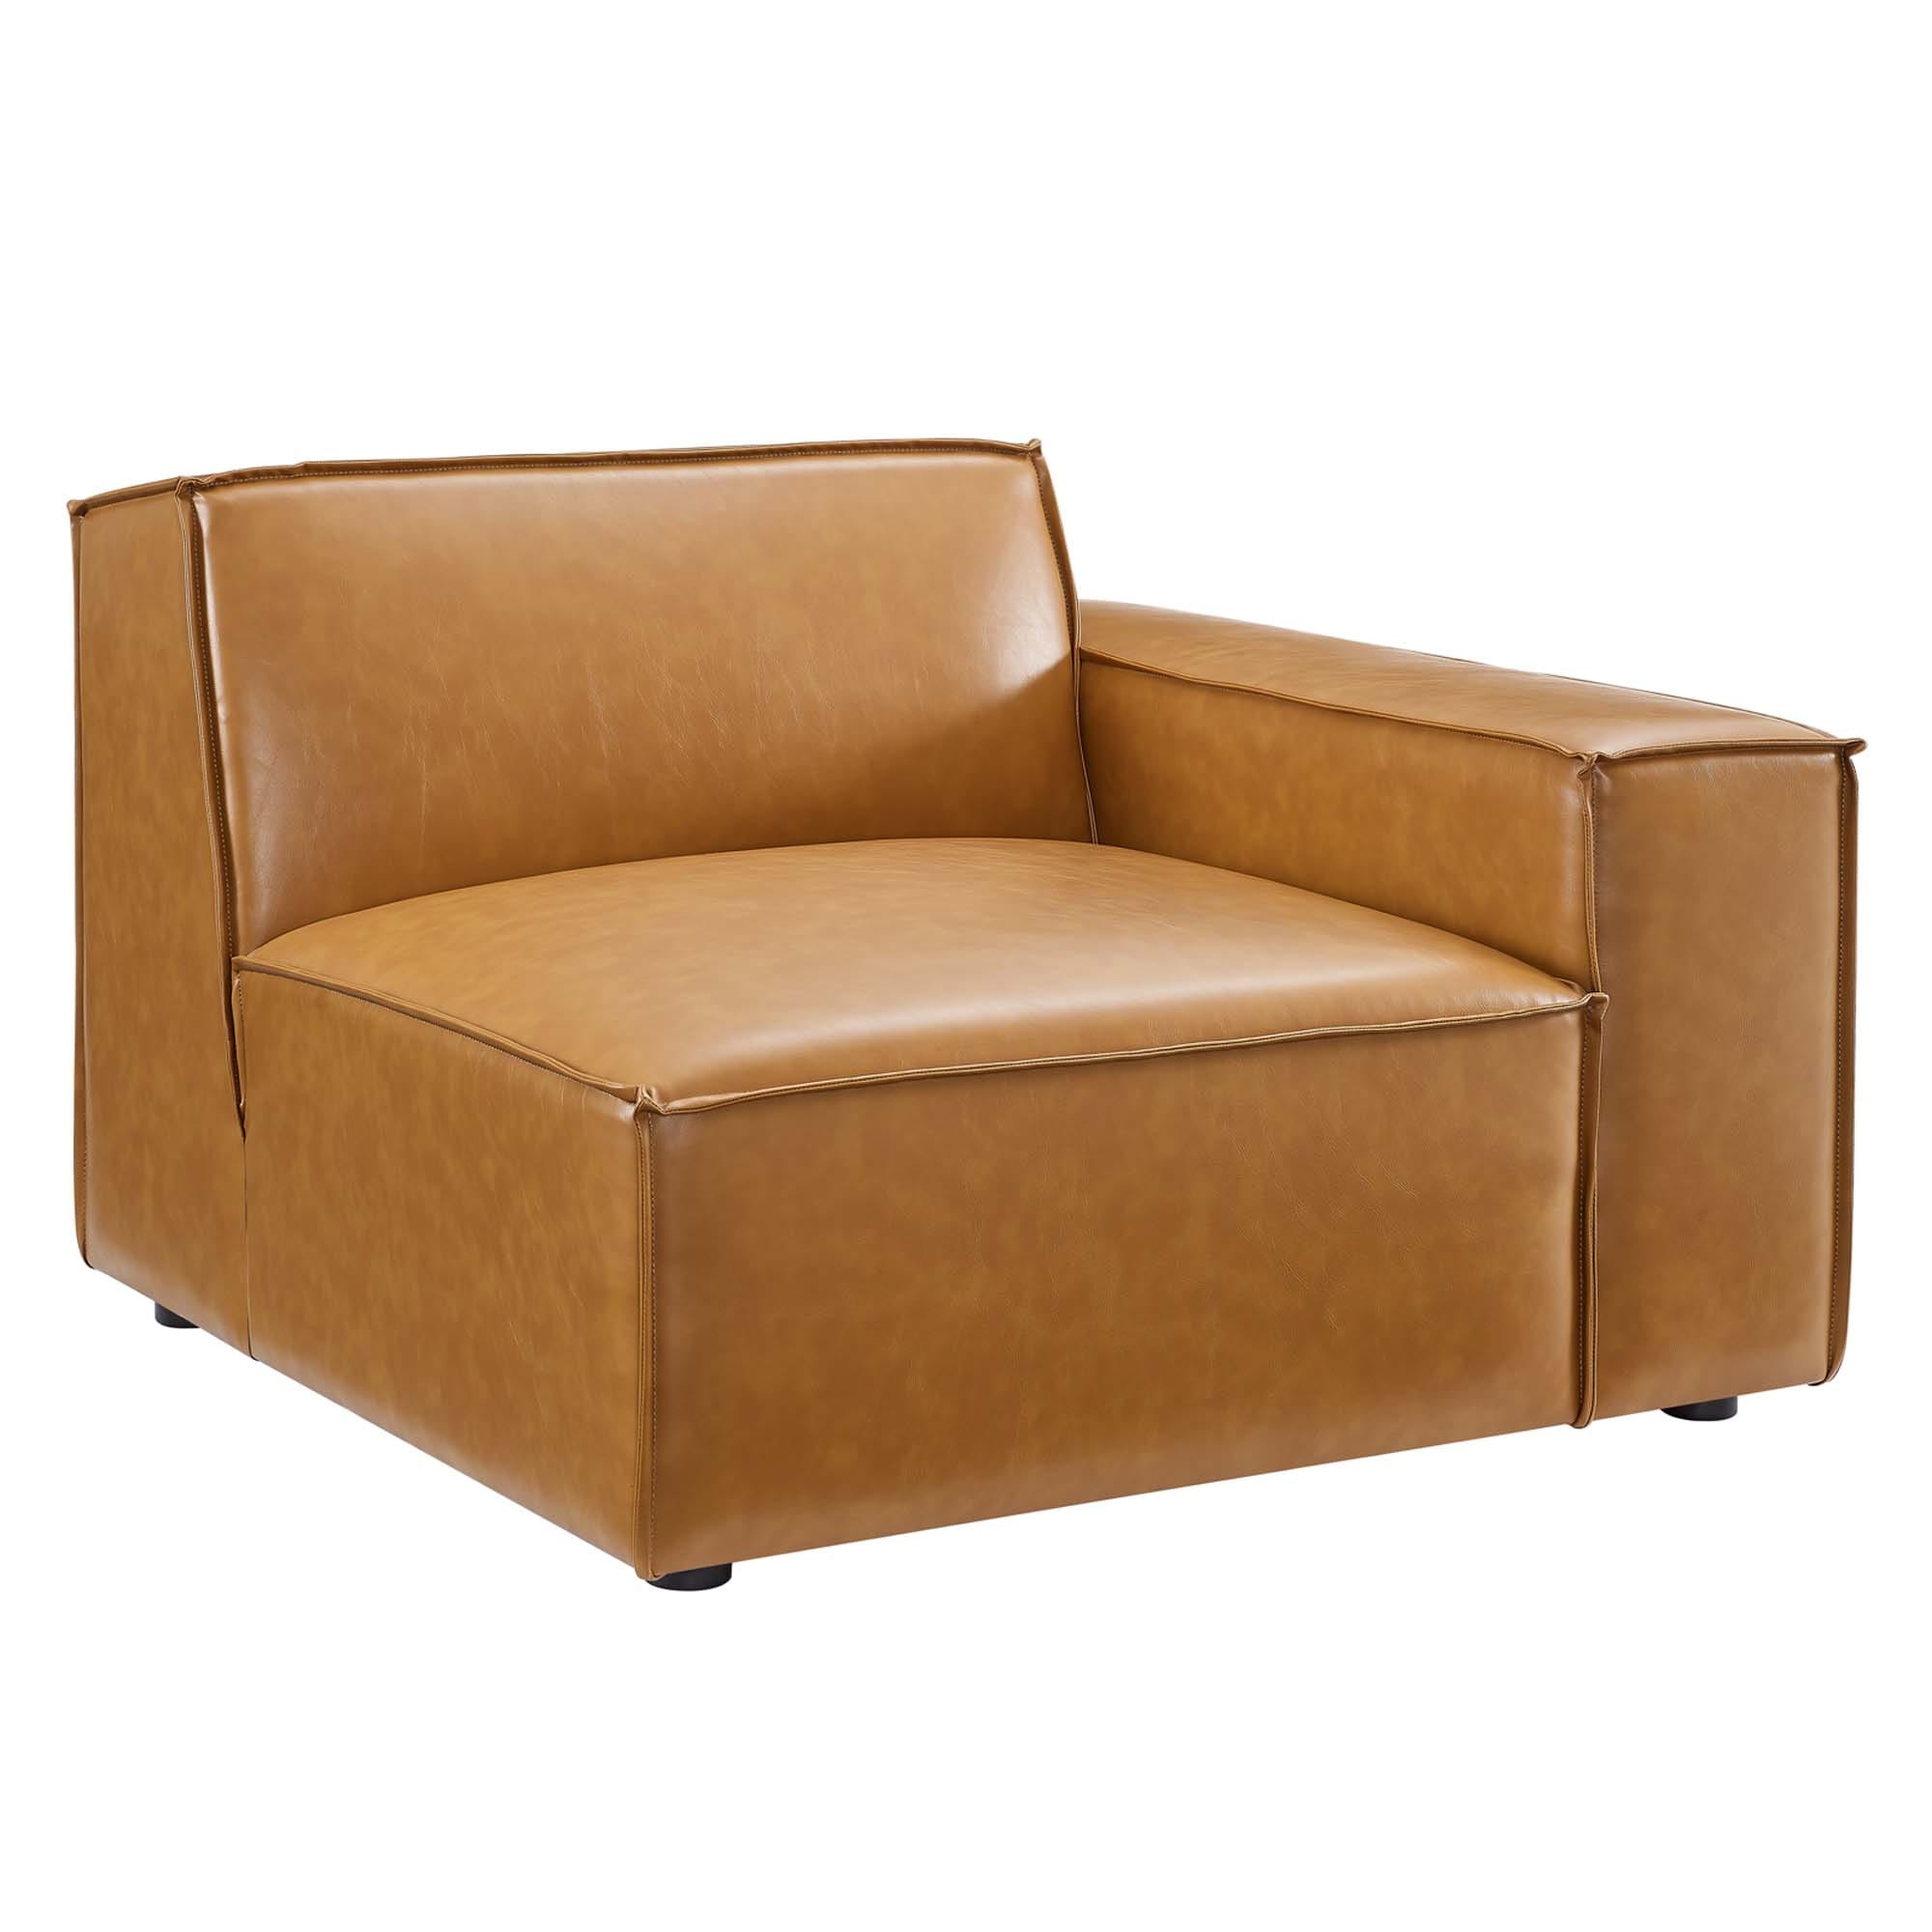 Restore Vegan Leather 3-Piece Sofa - On Sale - Bed Bath & Beyond - 32403106